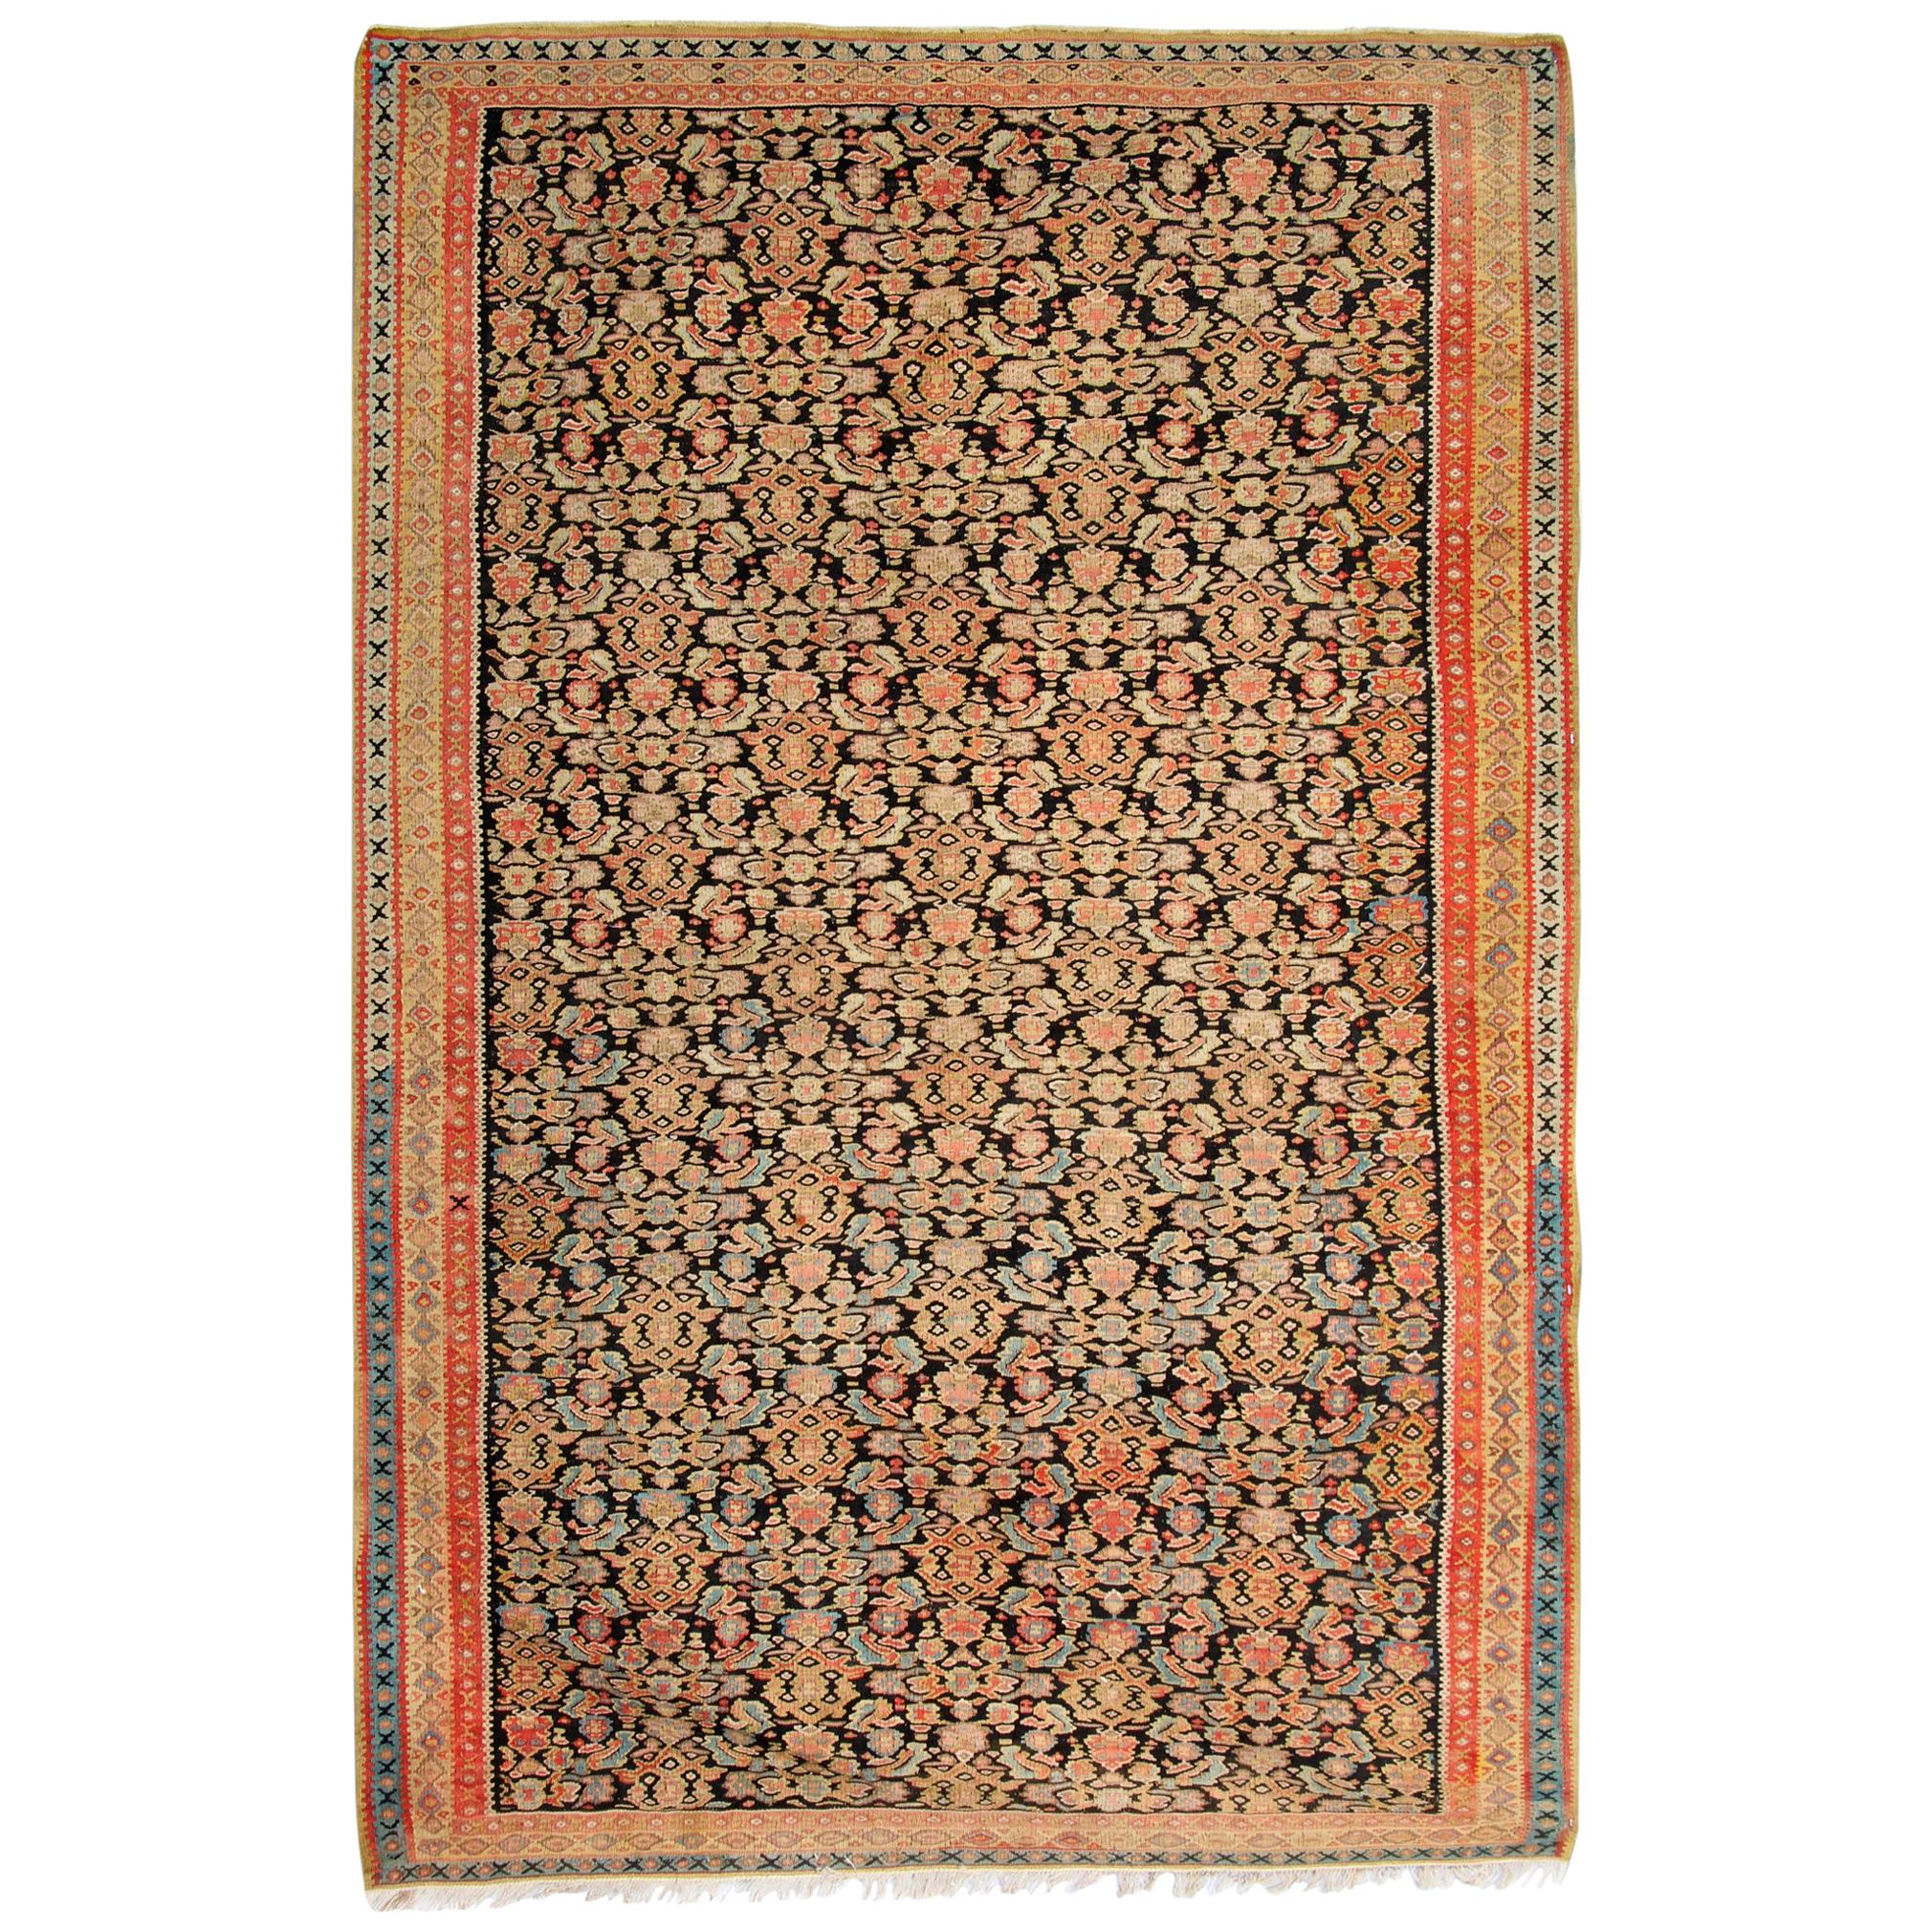 Antique Kilim Rug Traditional Rust Wool Area Rug Floral Carpet For Sale